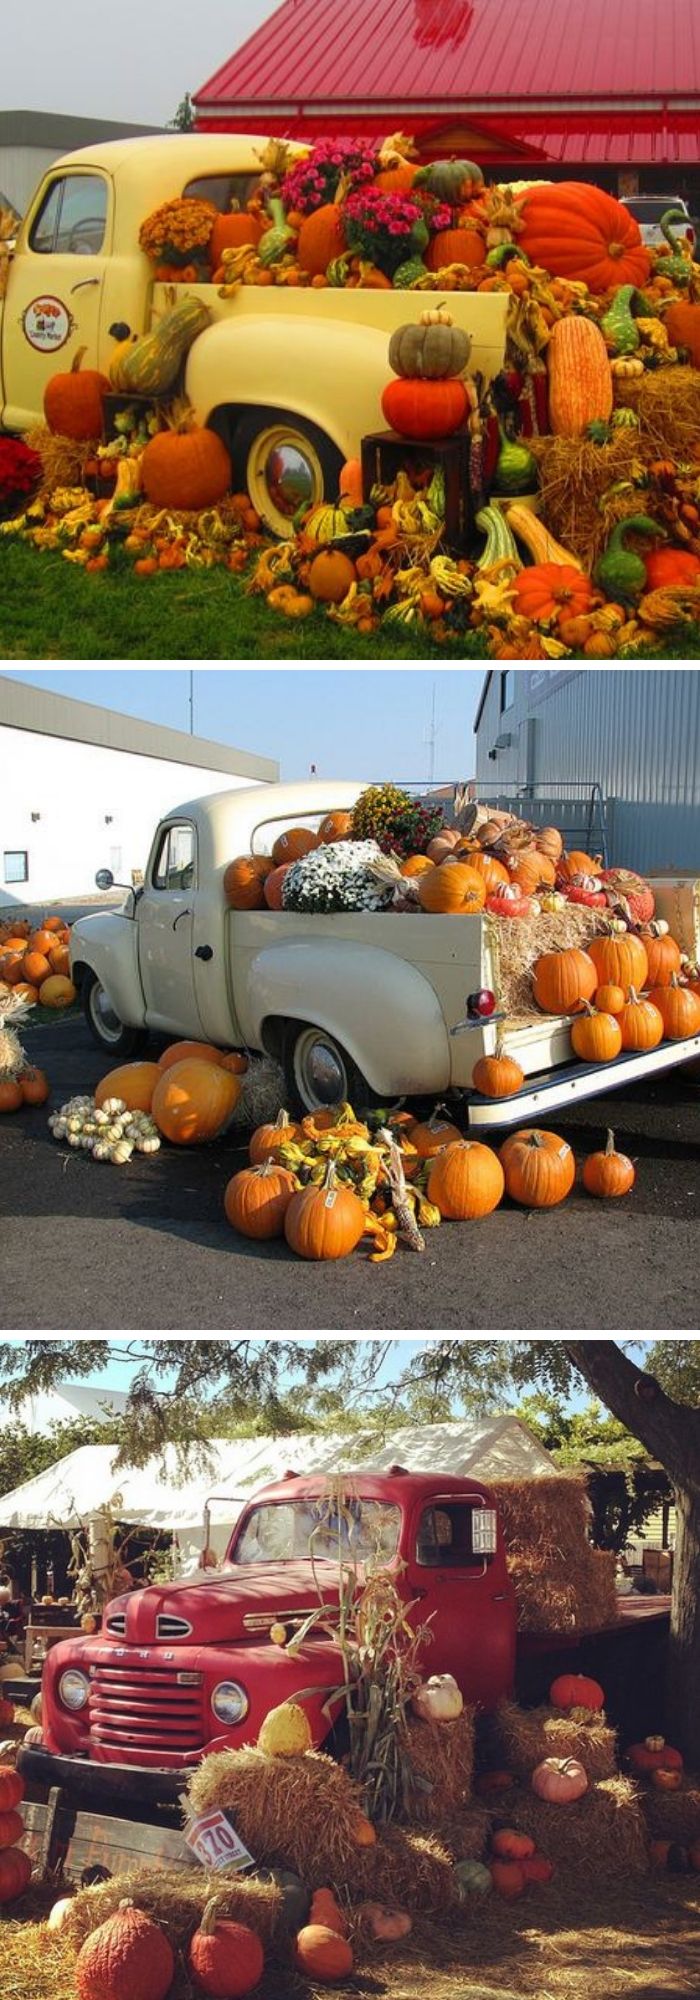 8 autumn harvest display ideas